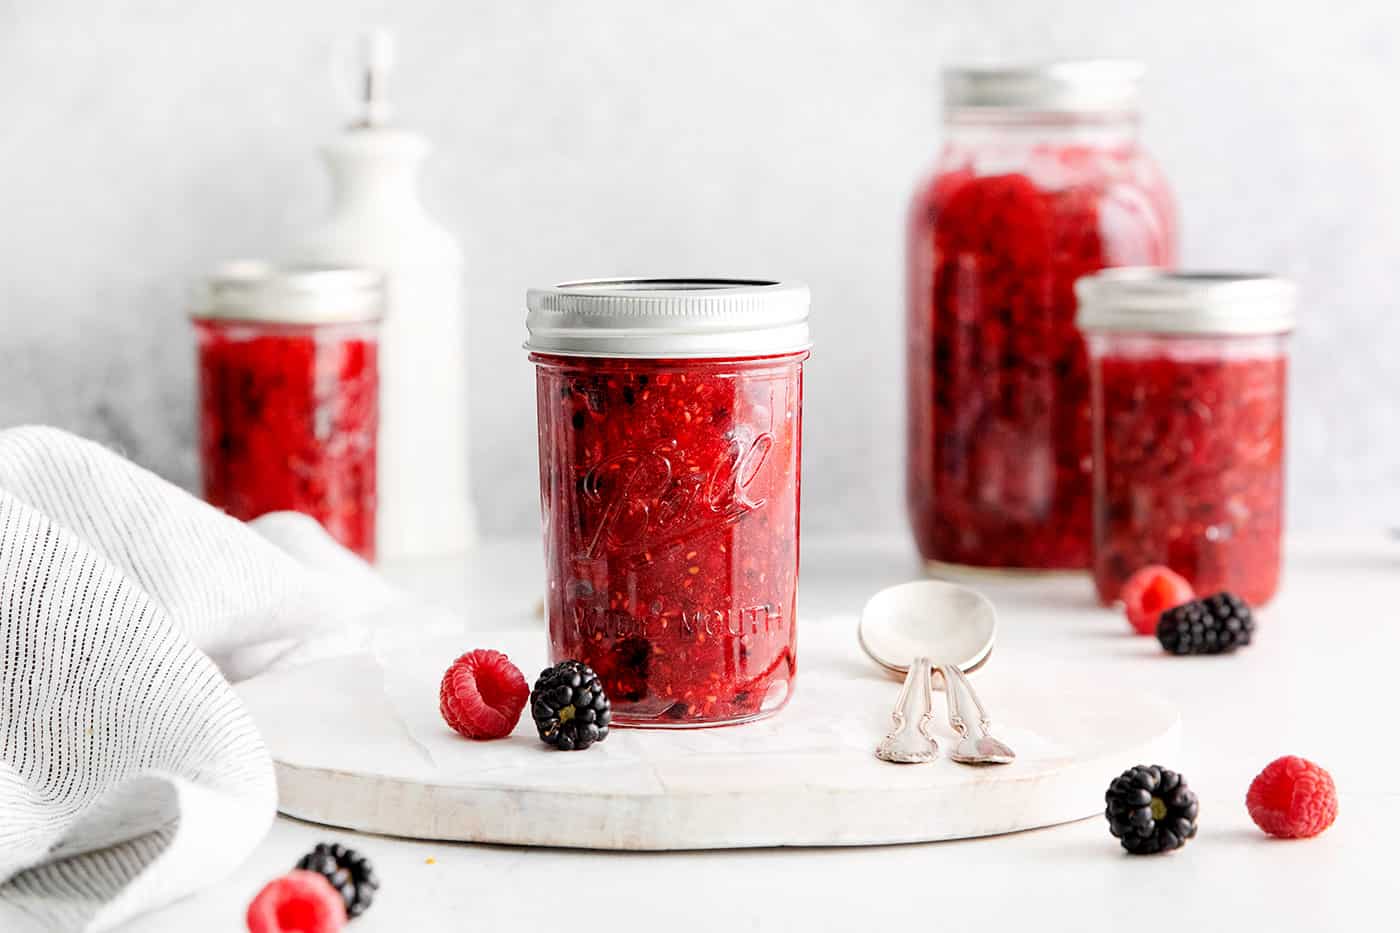 A jar of raspberry freezer jam on a white plate